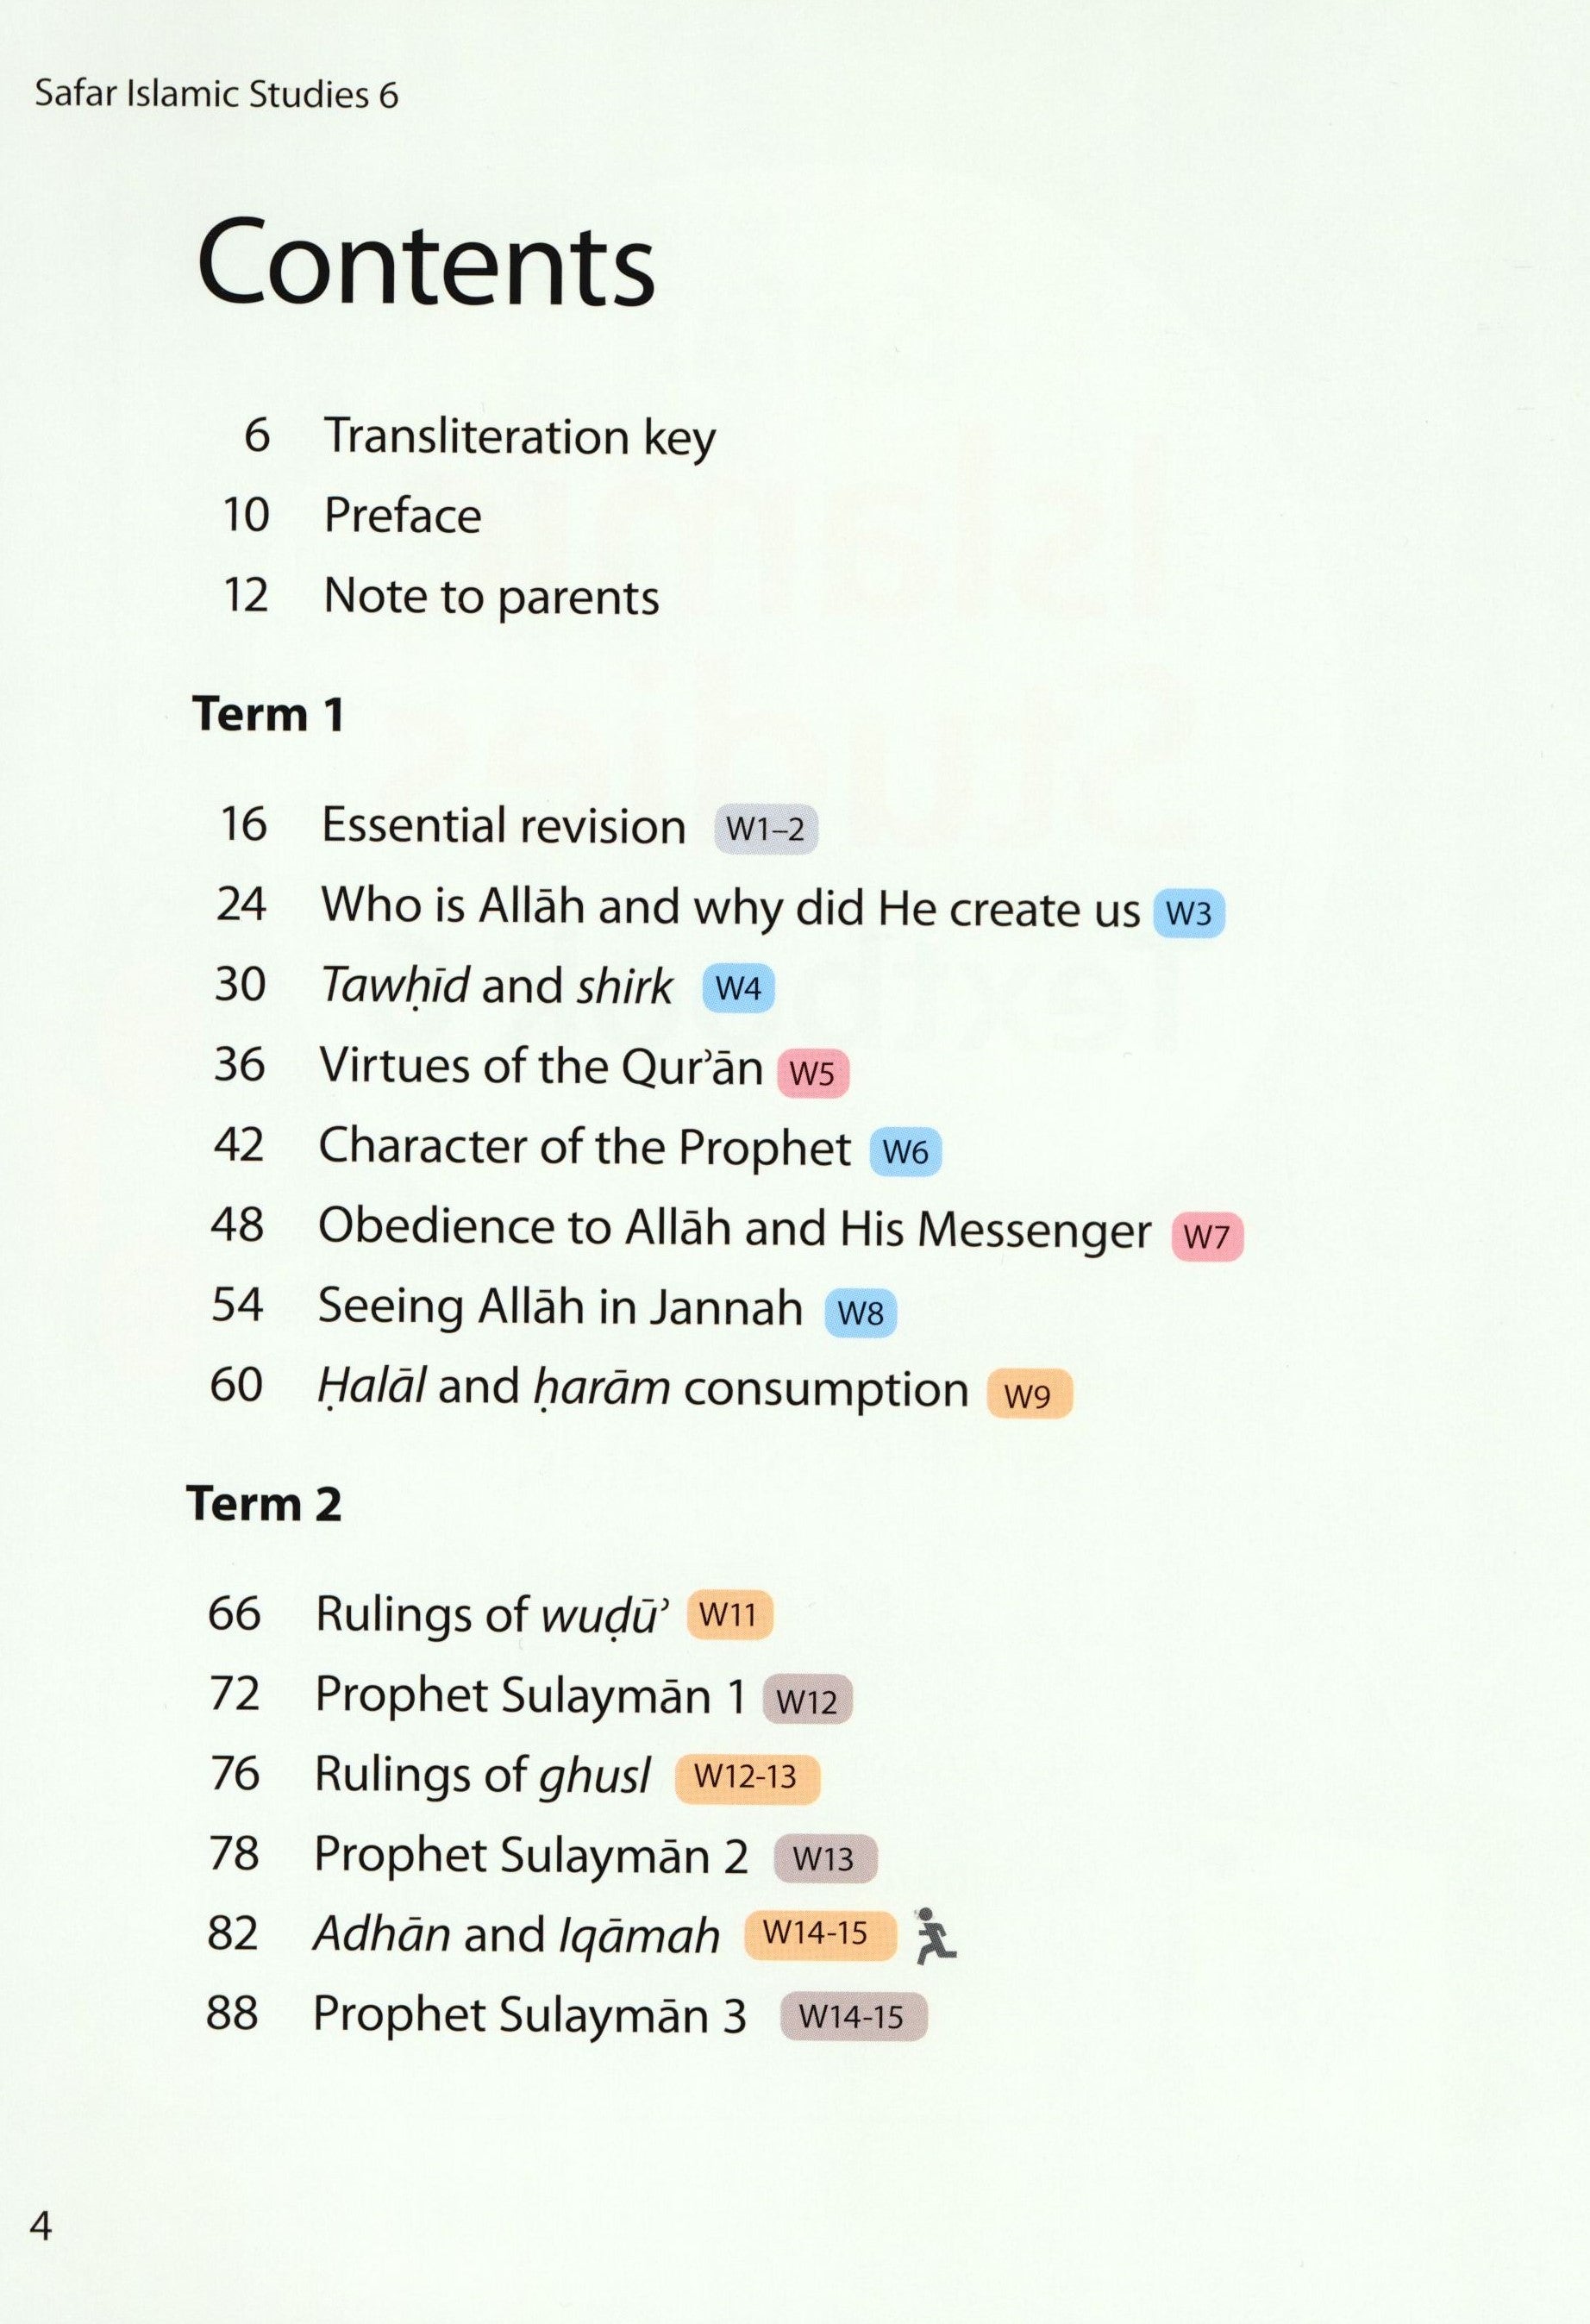 Safar Islamic Studies Textbook 6